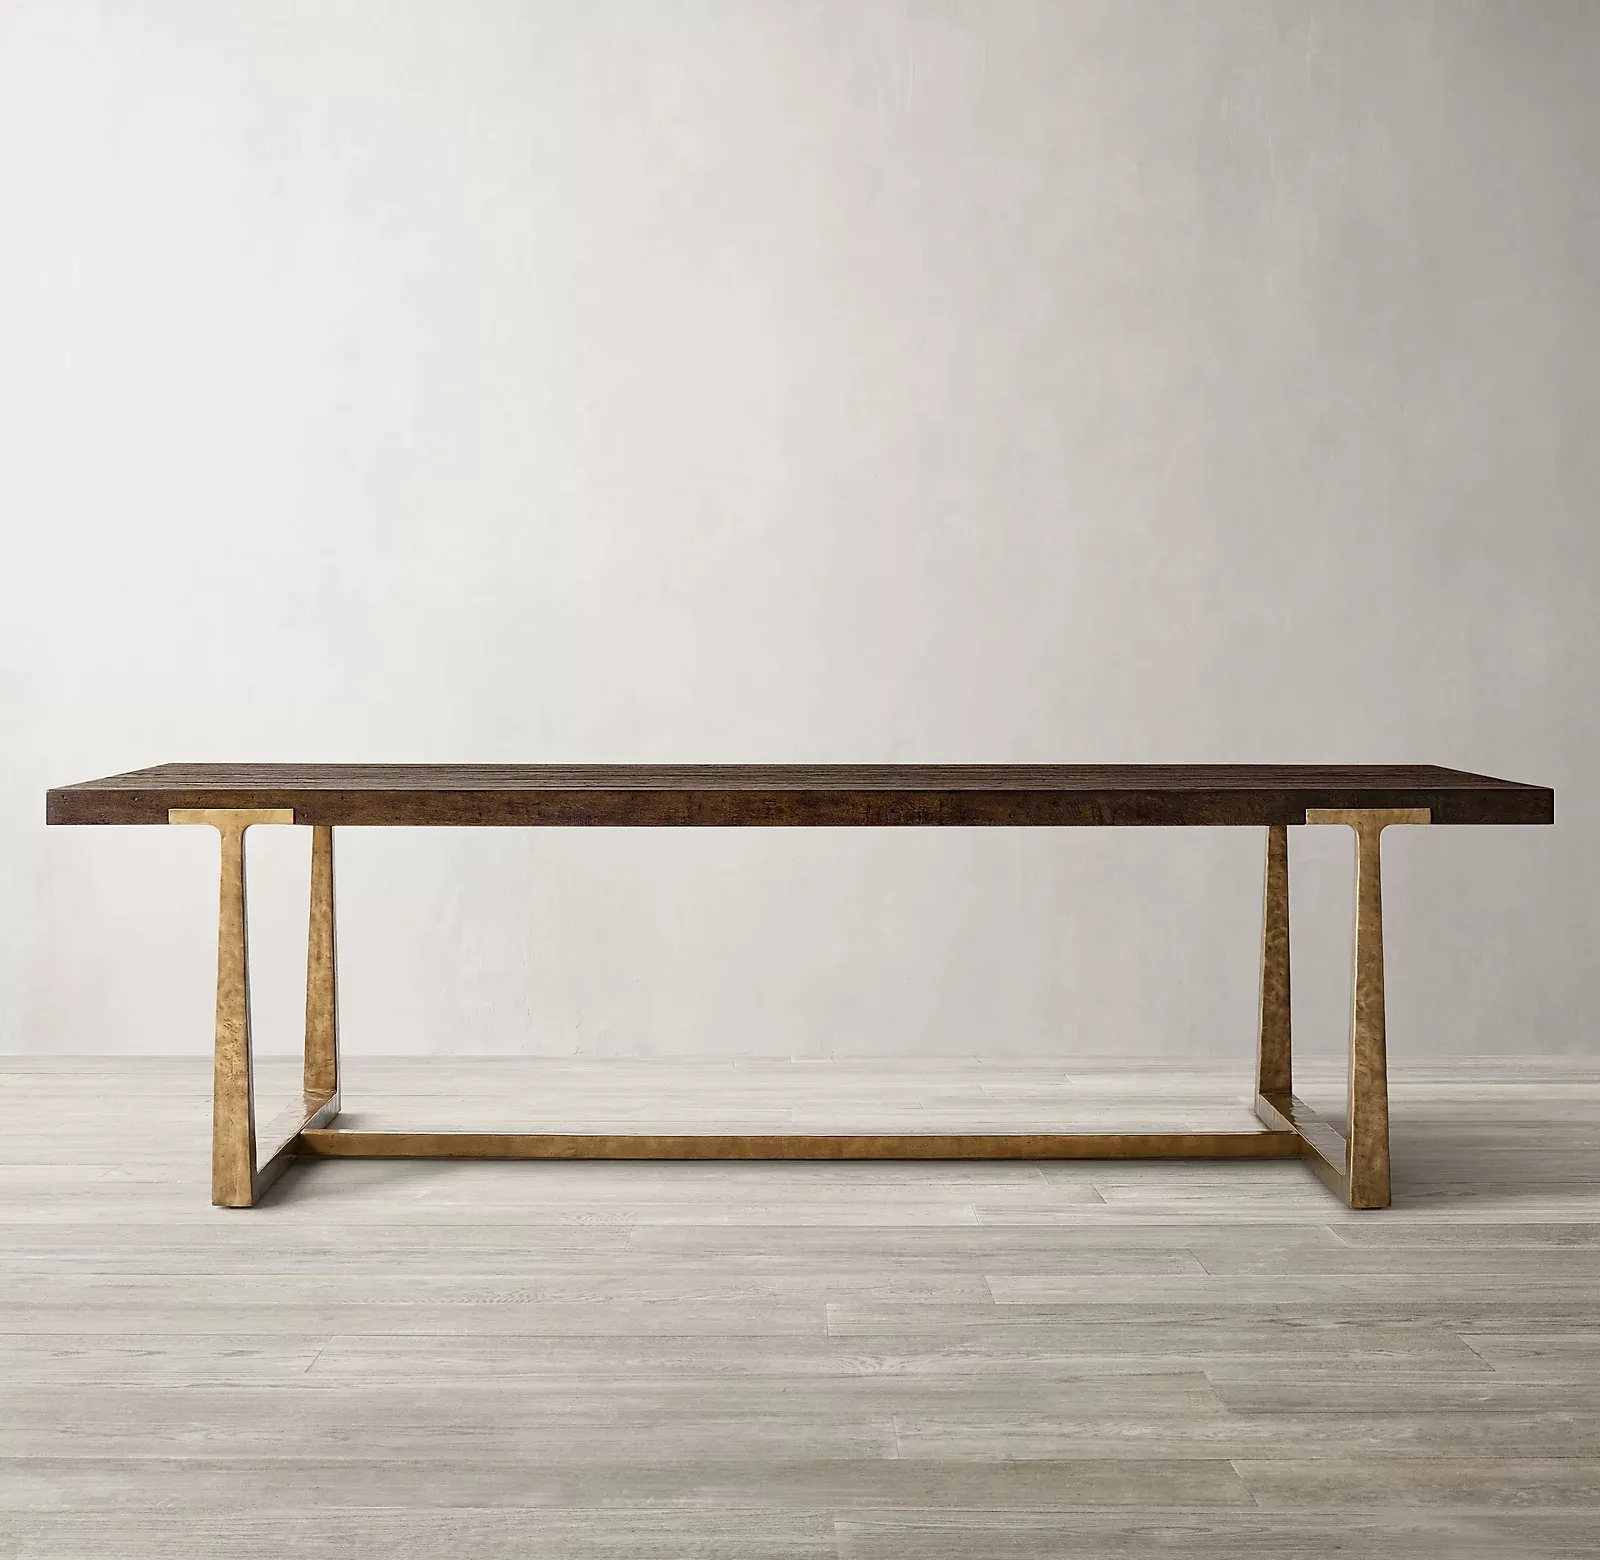 Muebles de lujo para comedor, mesas rectangulares de madera sólida de roble con base de metal de diseño americano moderno